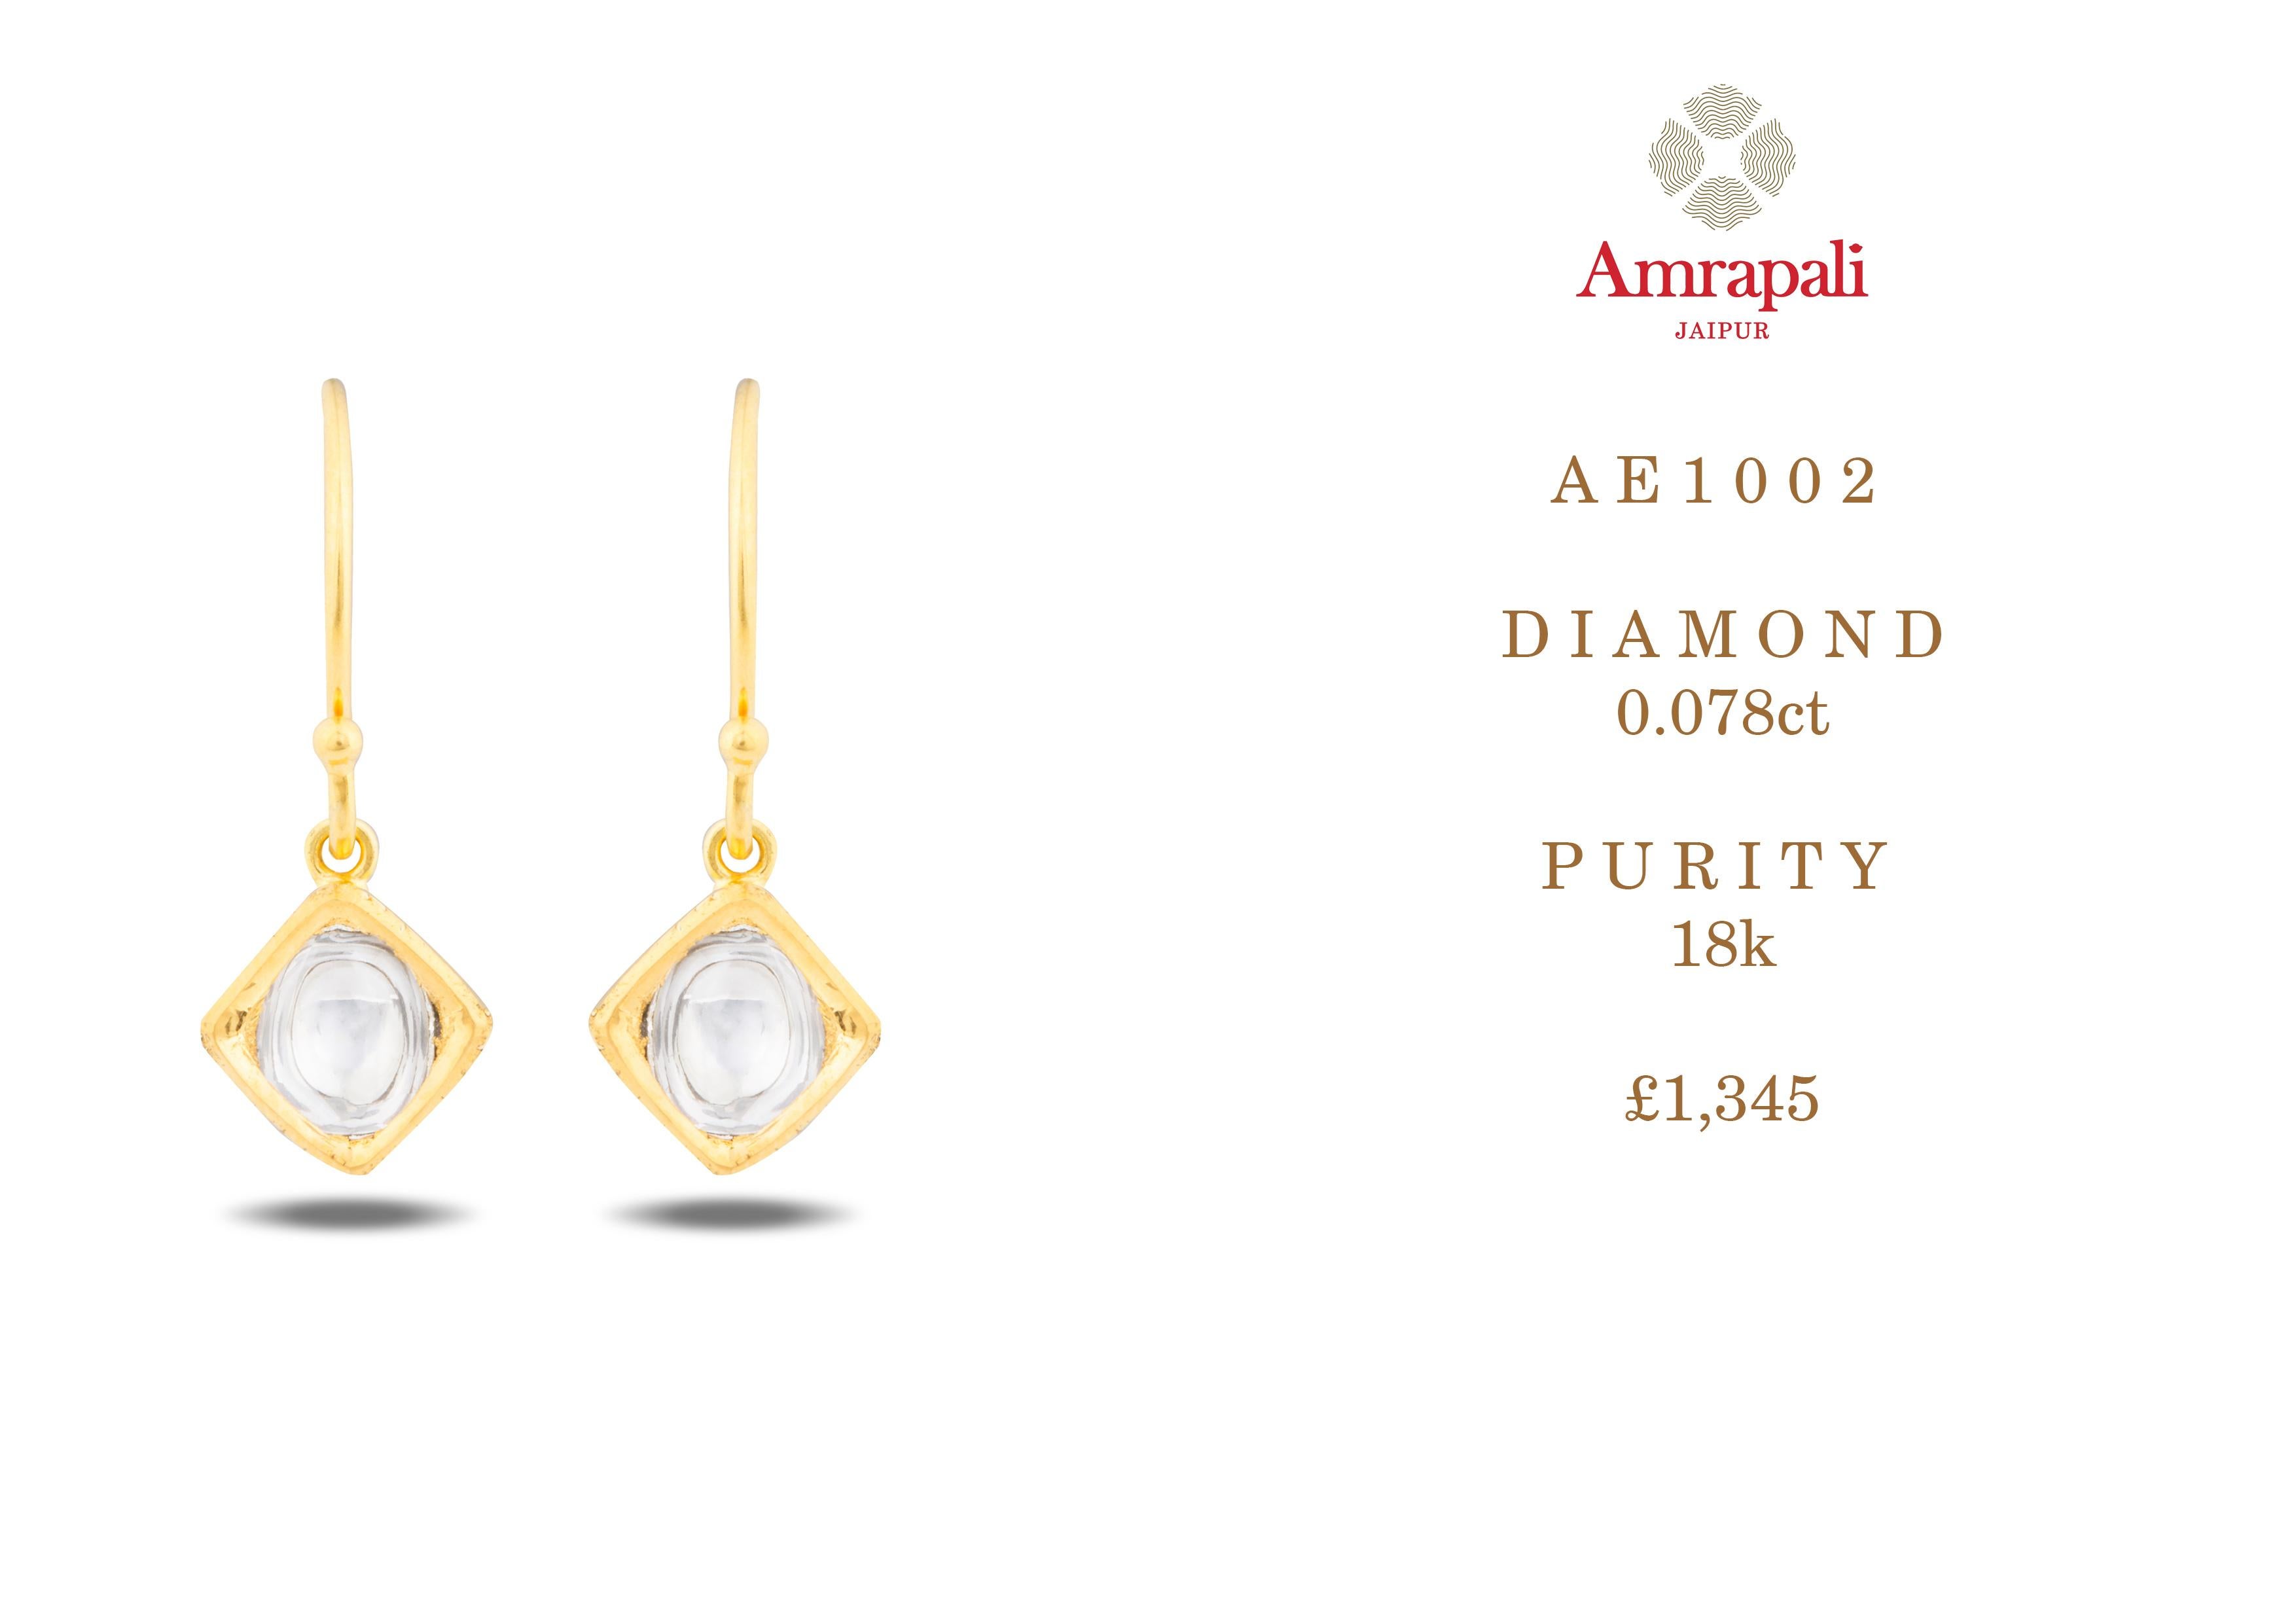 Amrapali Jewels 18k gold and Diamond earrings  

Diamond weight - 0.078ct

Length - 2.3cm

Width - 0.8cm